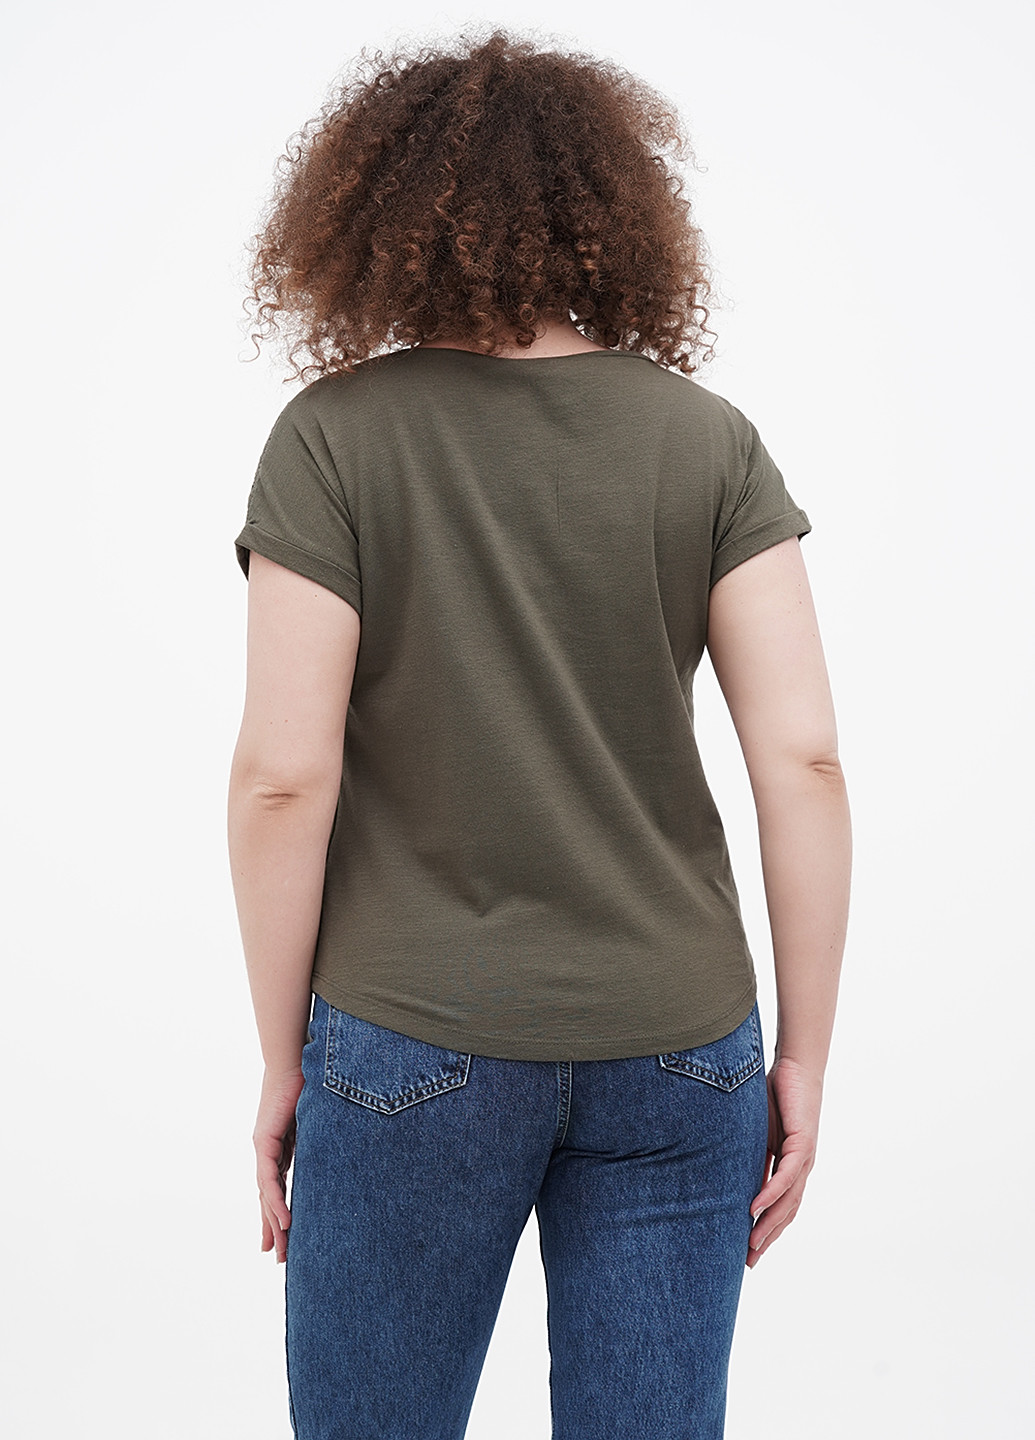 Хаки (оливковая) летняя футболка Minus